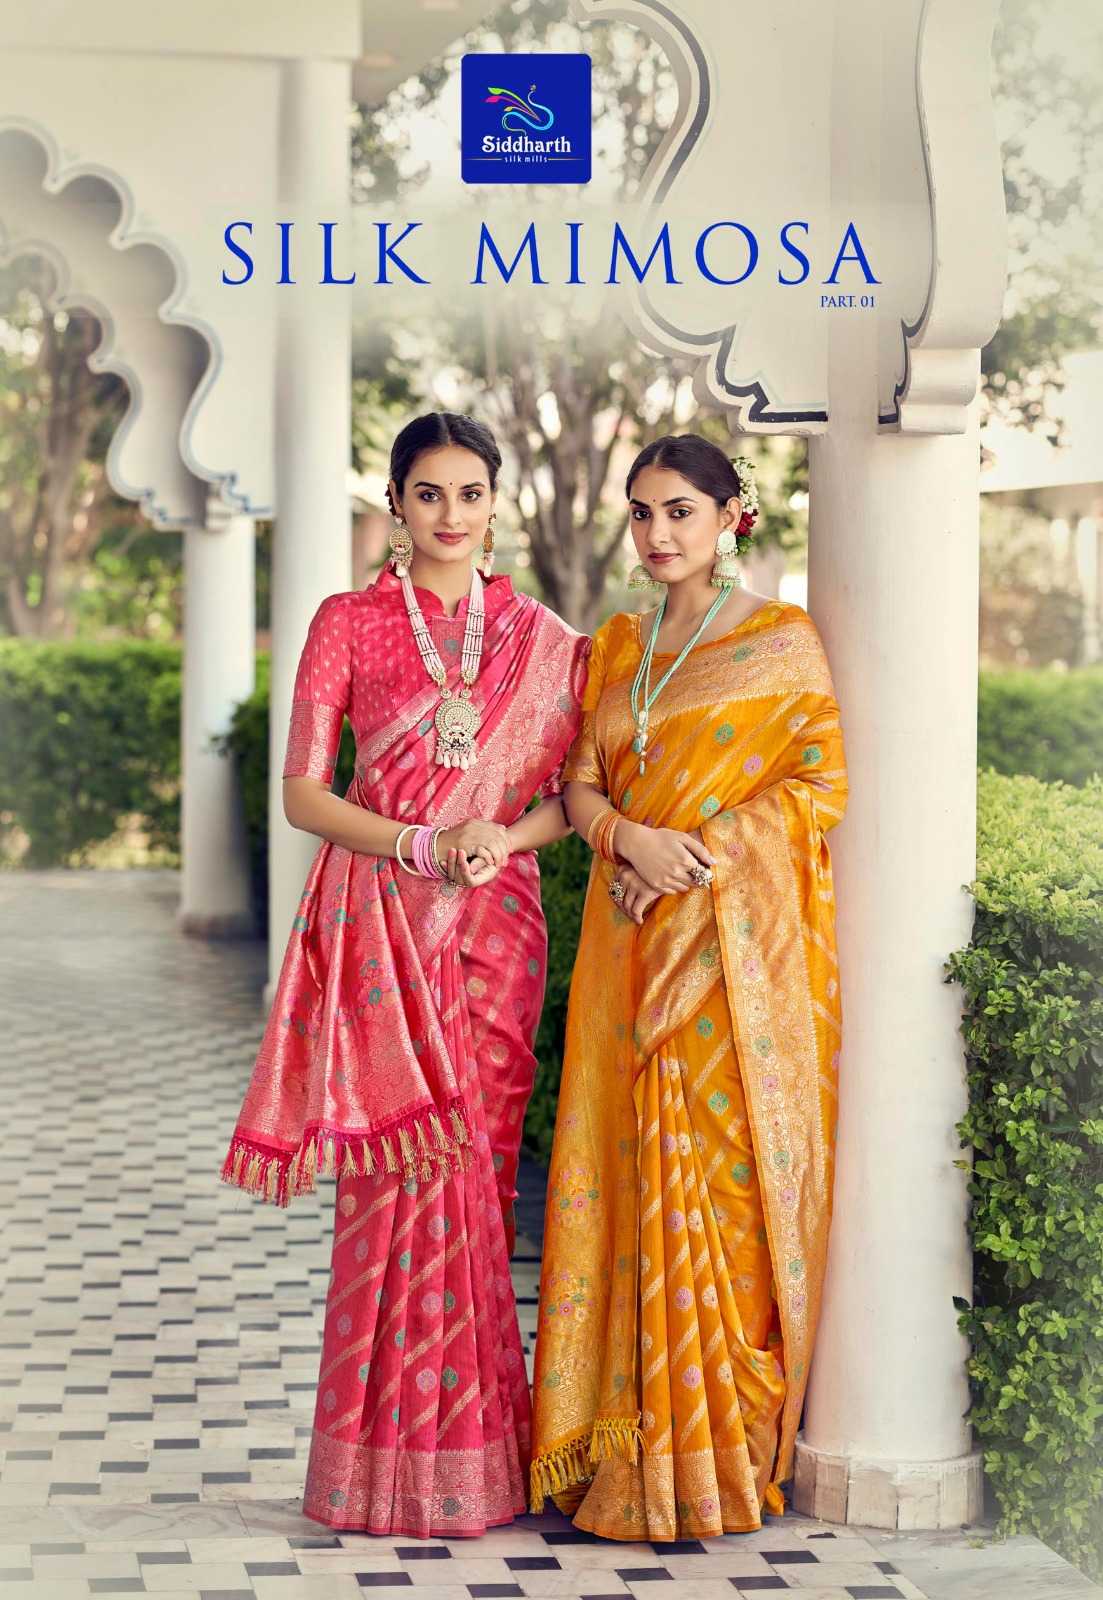 Silk mimosa by siddharth latest silk saree supplier